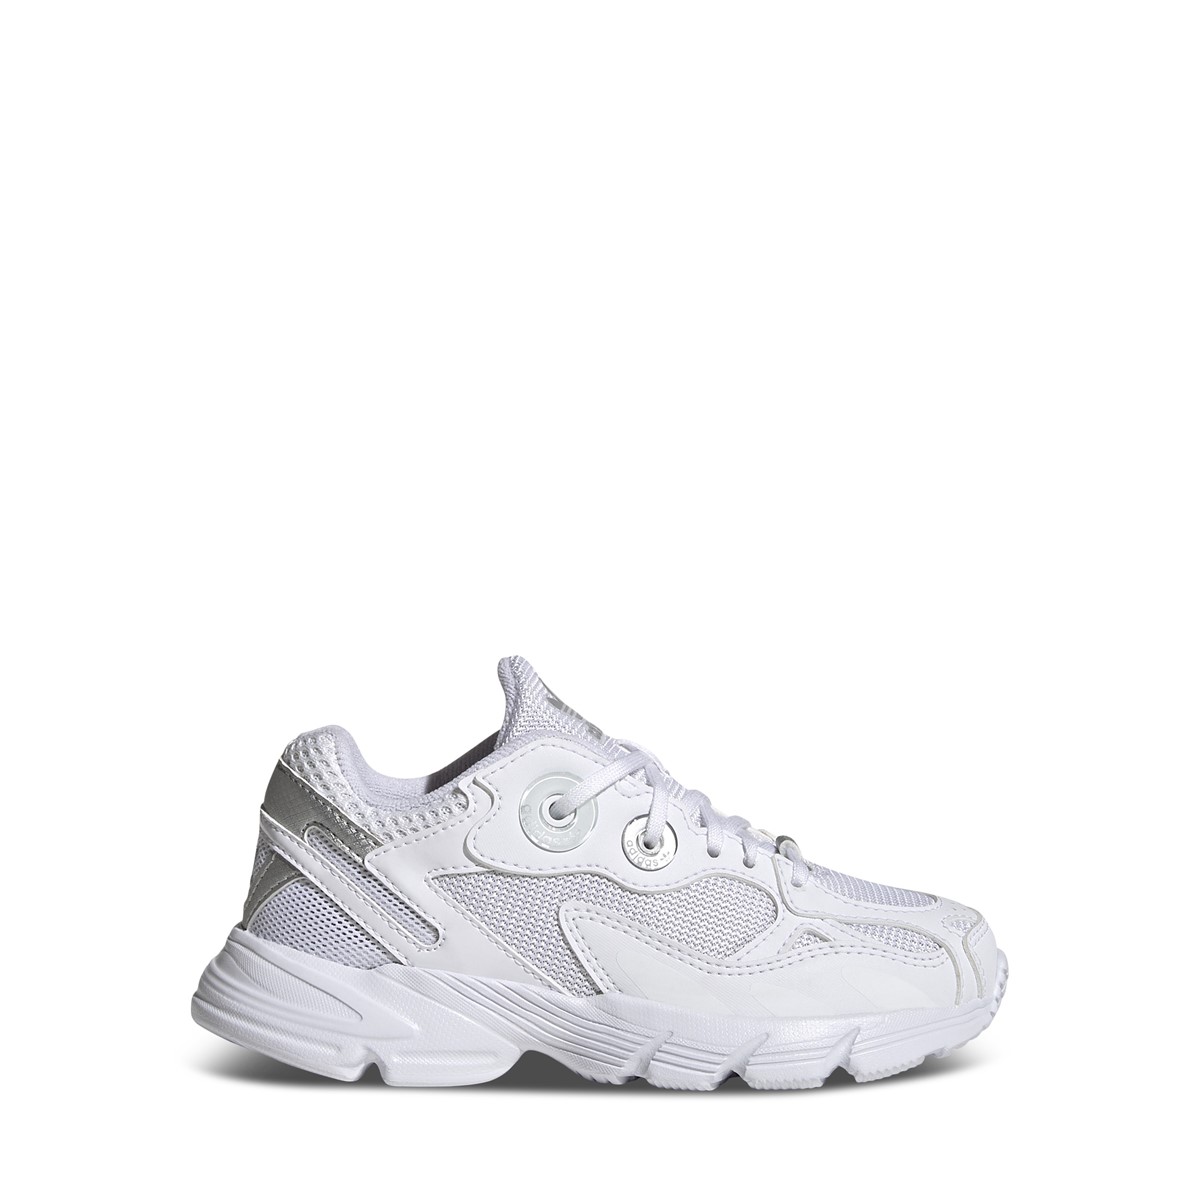 Little Kids' Astir Sneakers in White